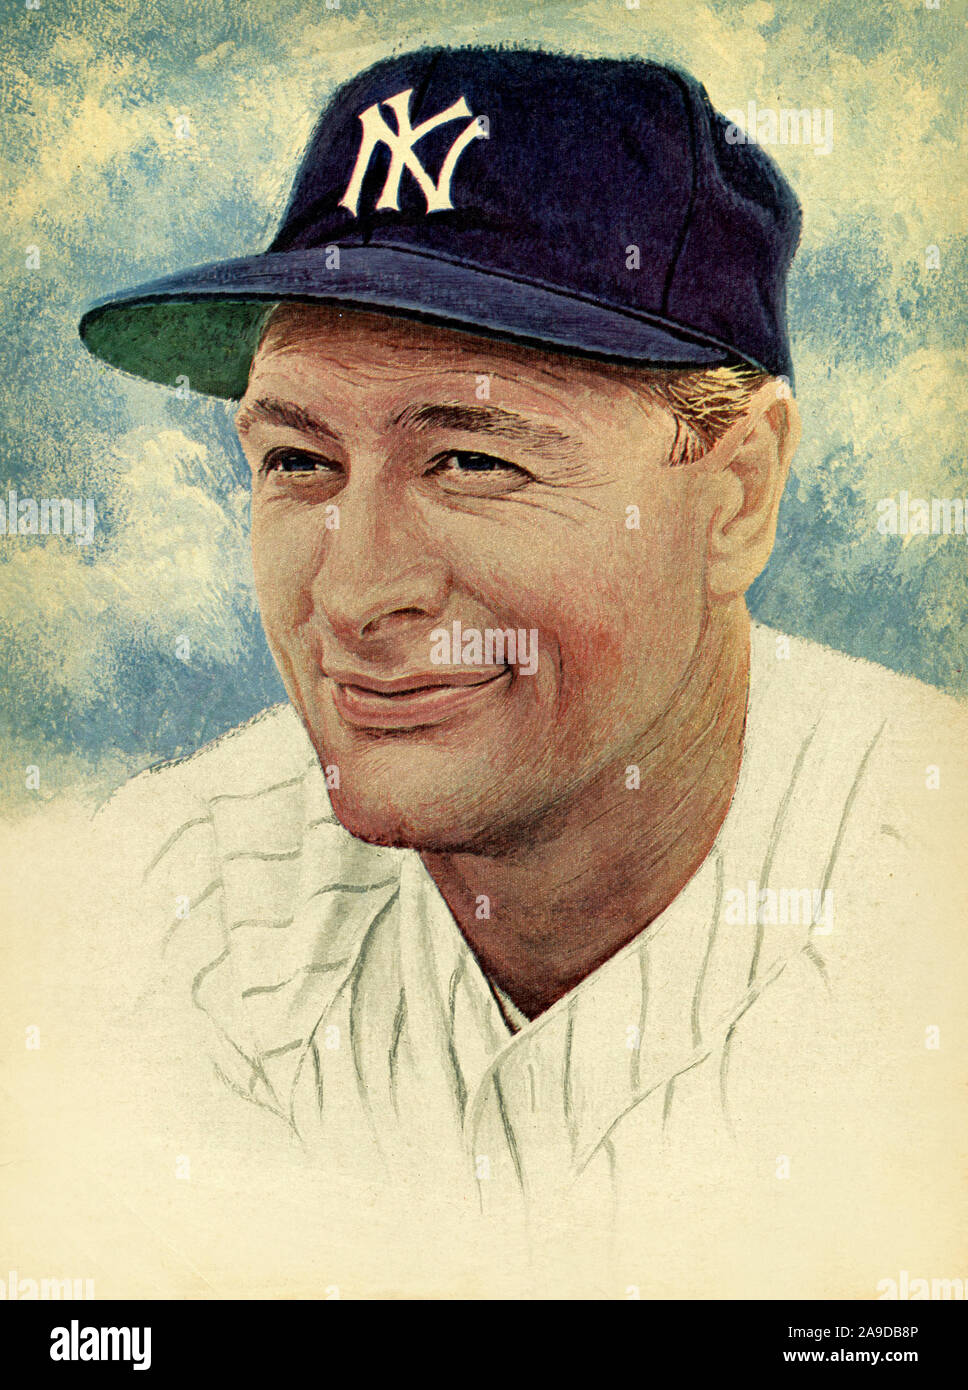 Vintage illustration of New York Yankee legend Lou Gehrig from a